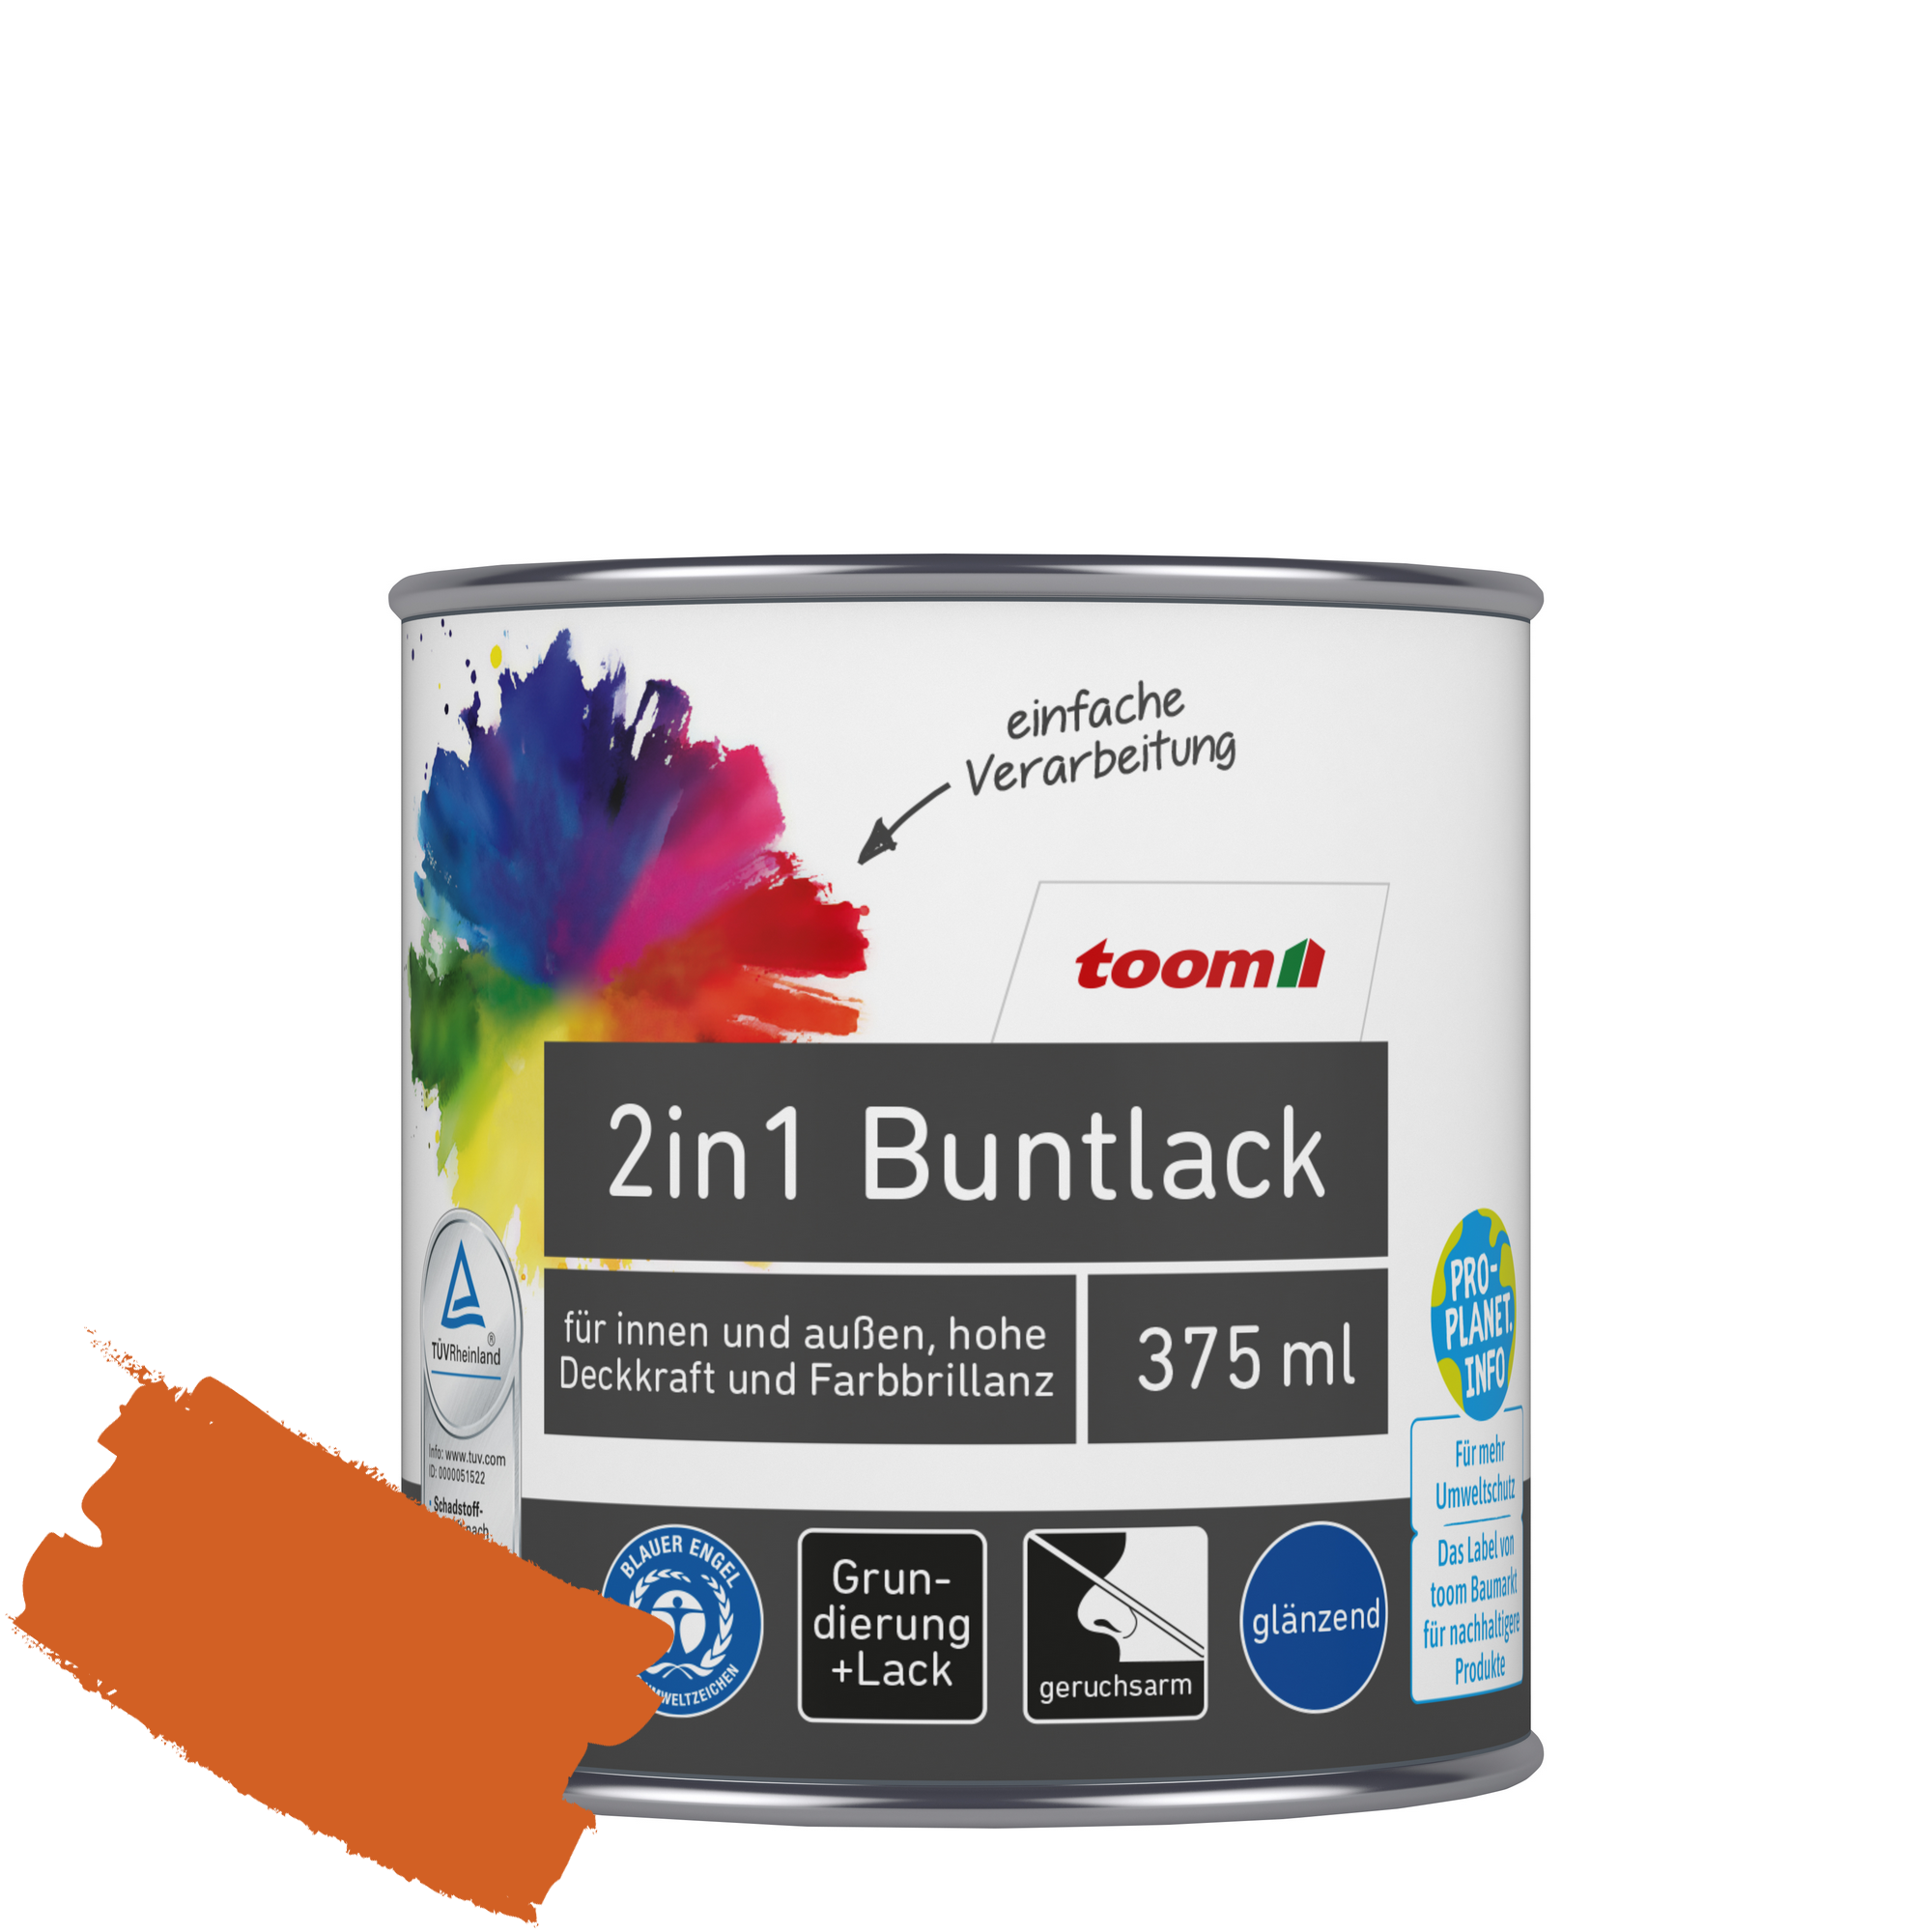 2in1 Buntlack 'Feuerglut' orange glänzend 375 ml + product picture